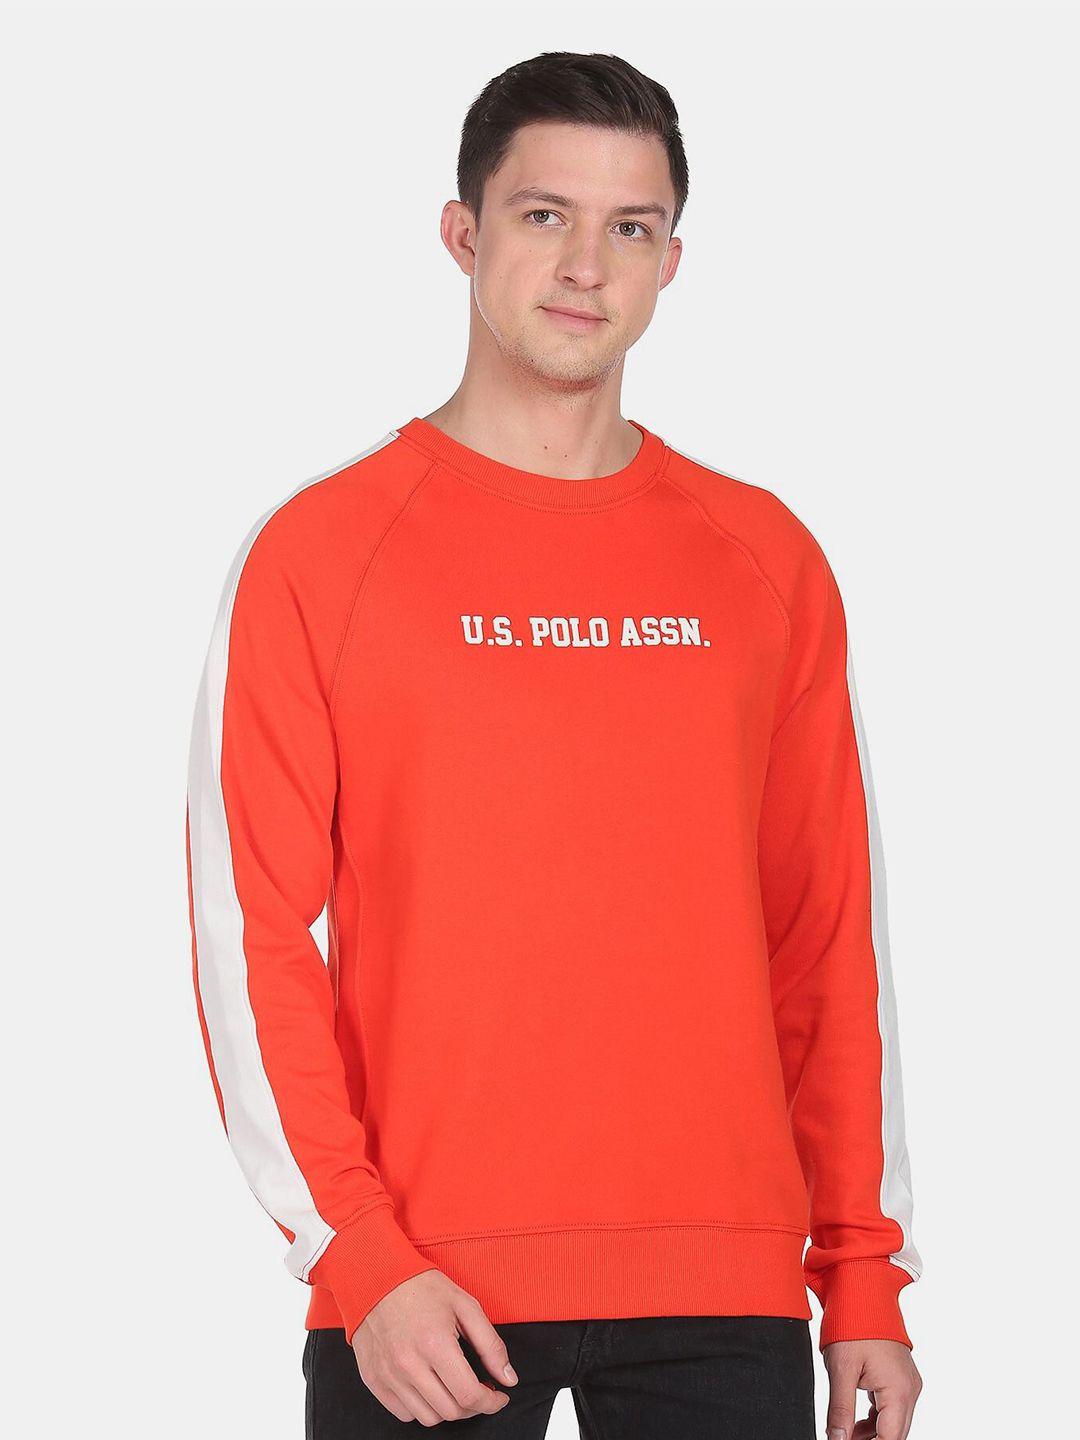 u-s-polo-assn-denim-co-men-printed-sweatshirt